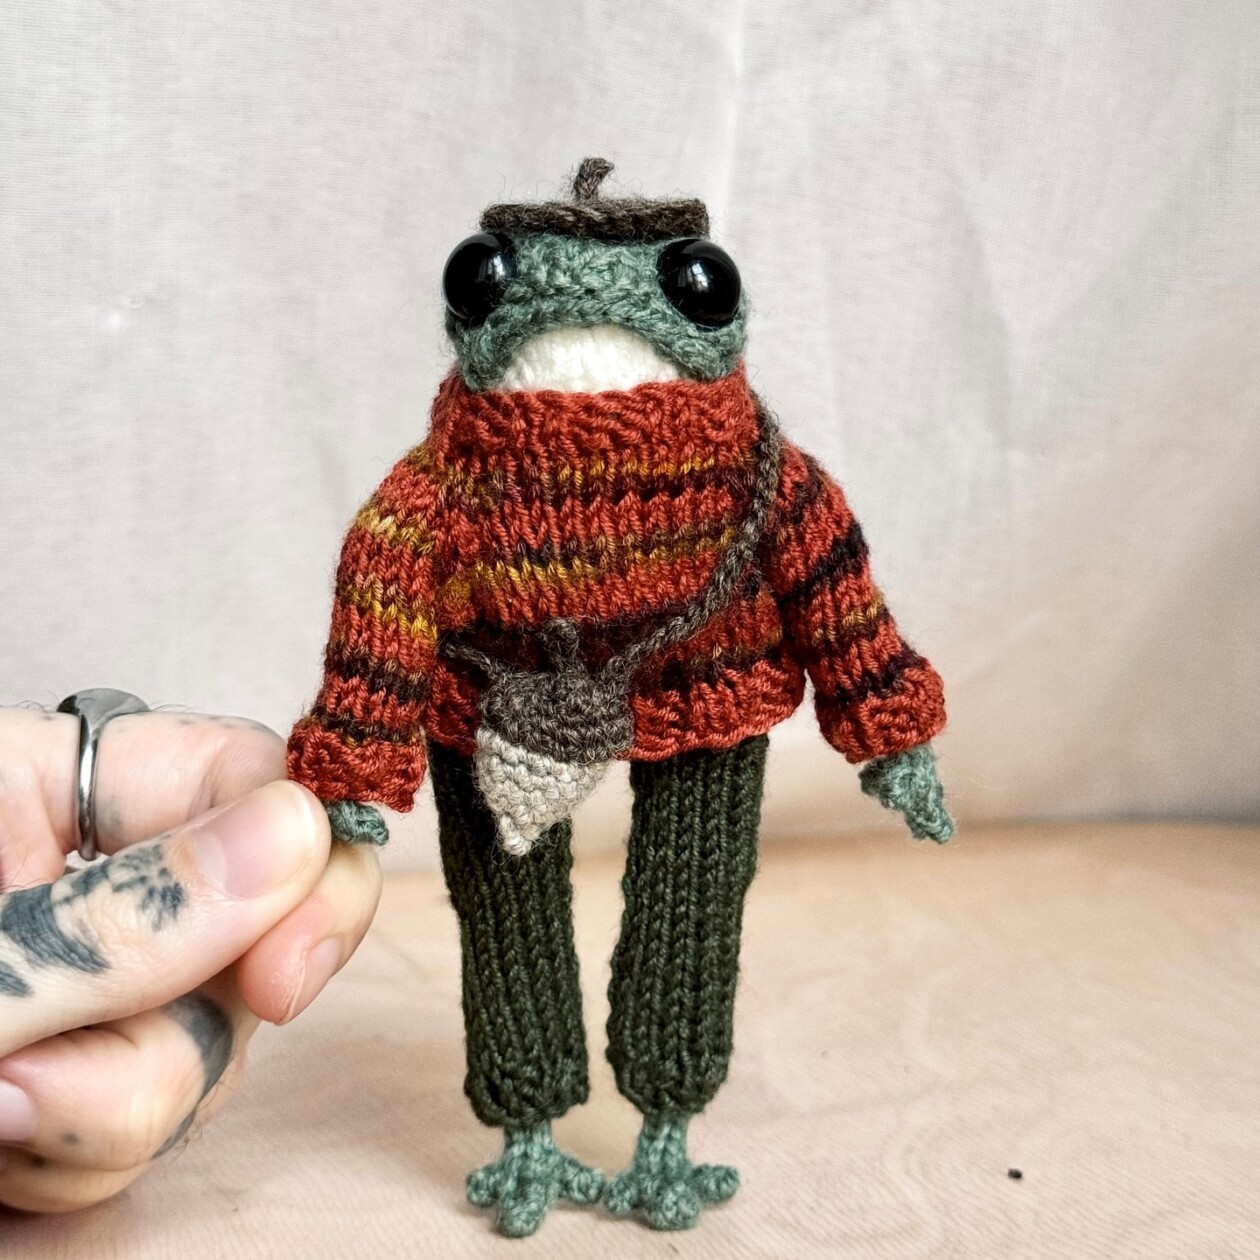 Enchanting Anthropomorphized Frog Crochet Patterns By Elliot (19)